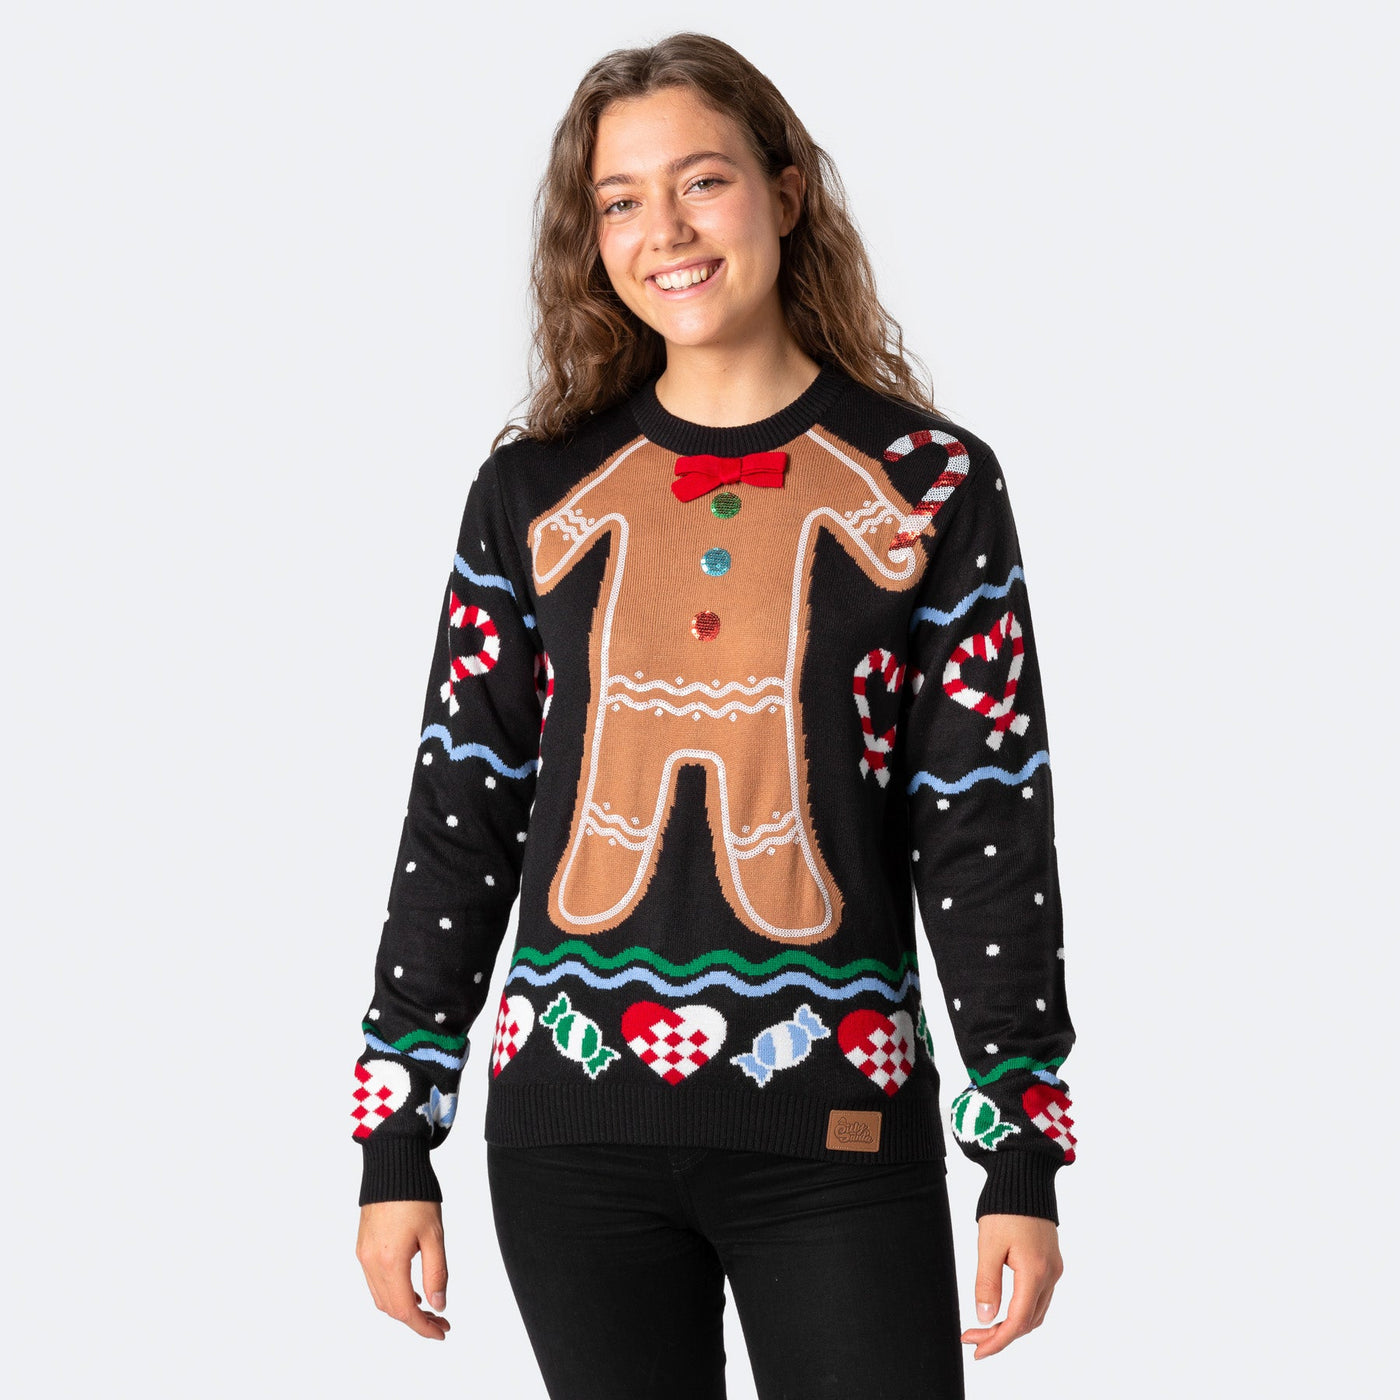 Women's Gingerbread Man Christmas Sweater